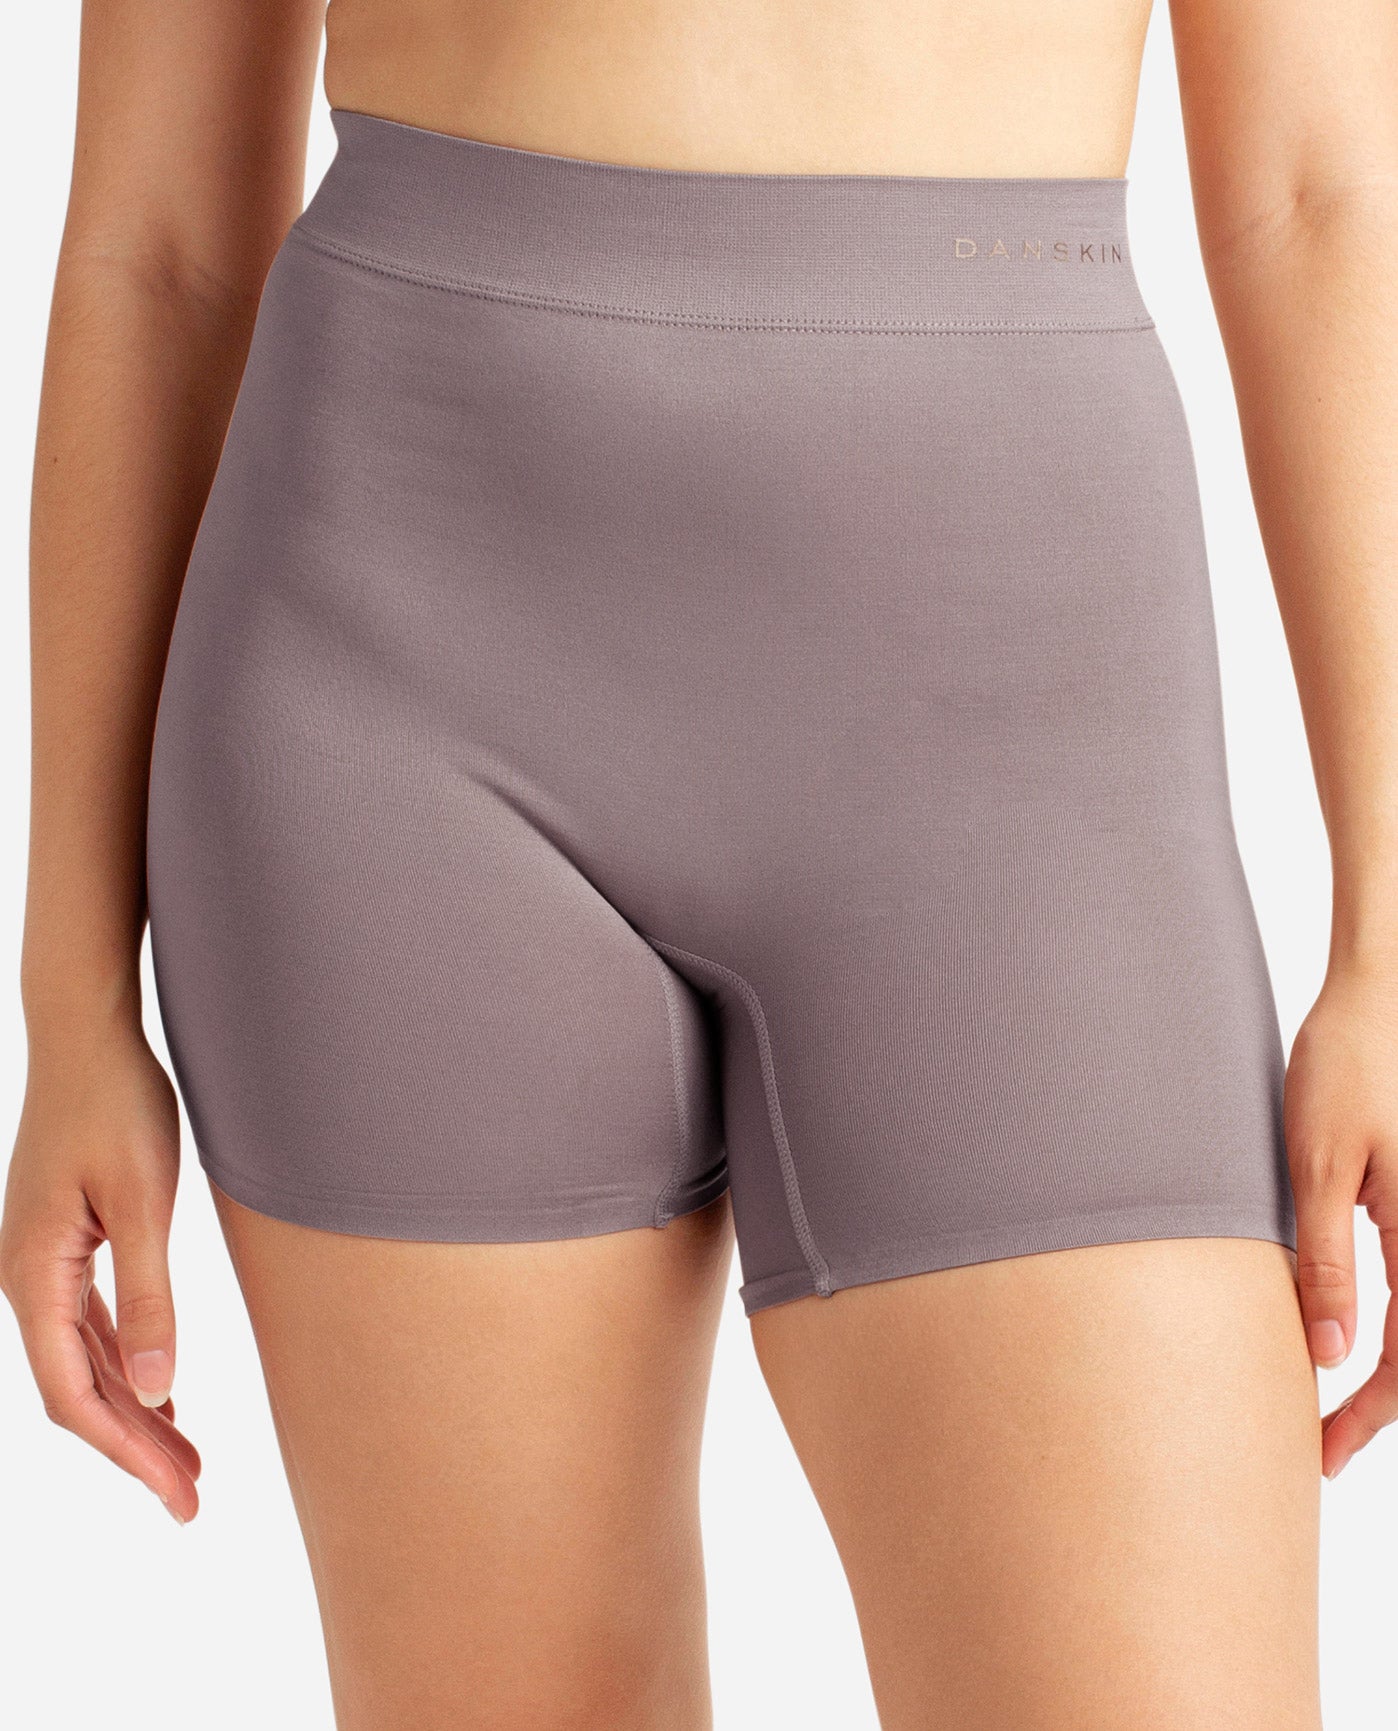 Anygirl Slip Shorts for Under Dresses Tummy Control Shapewear